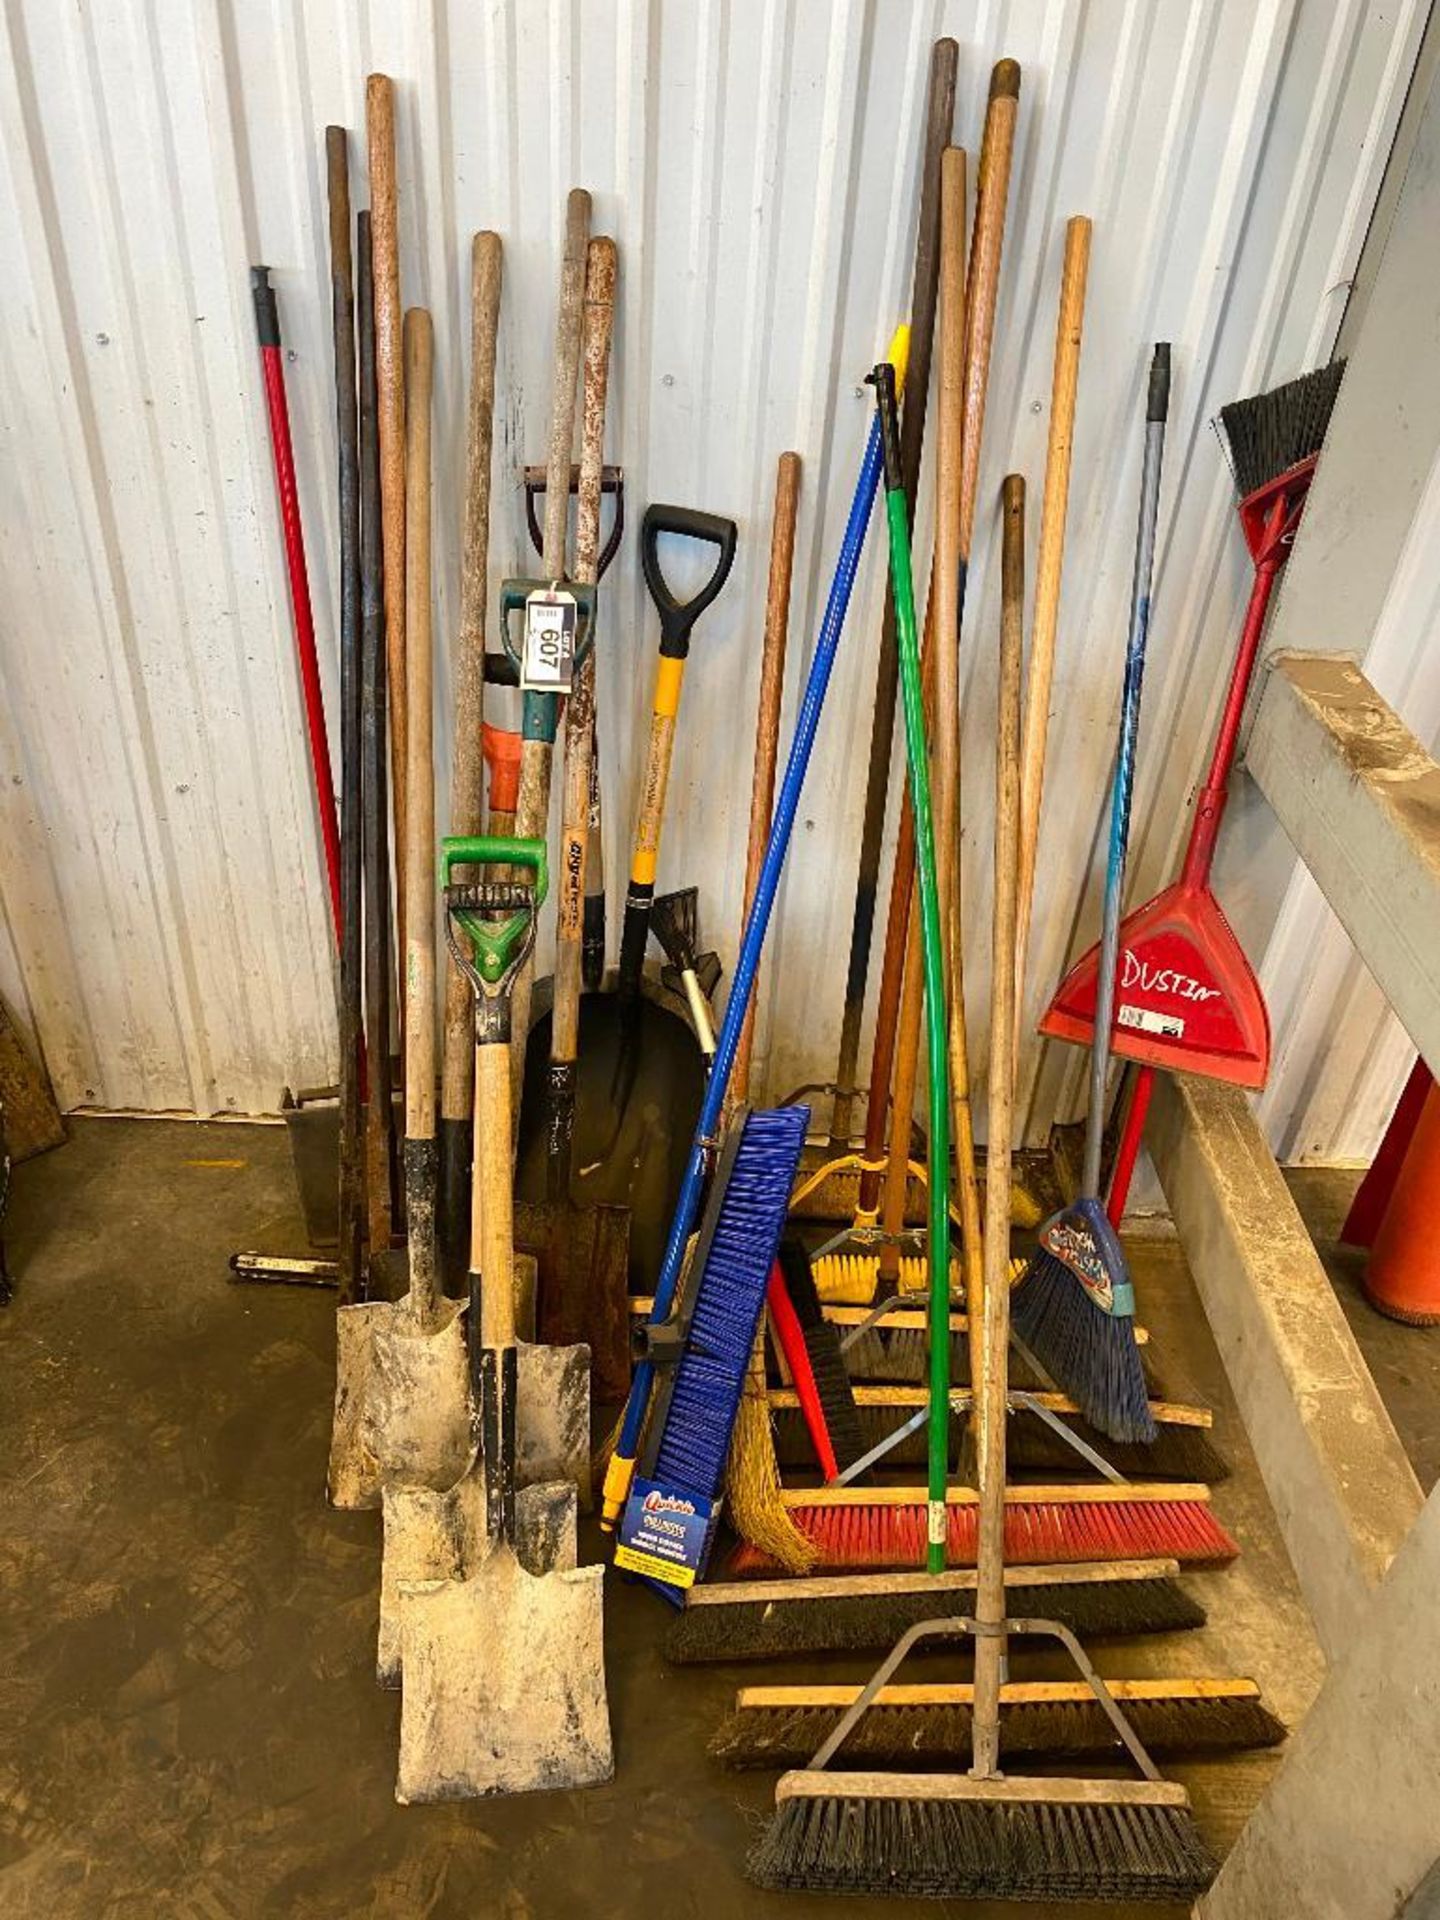 Lot of asst. Brooms and Shovels